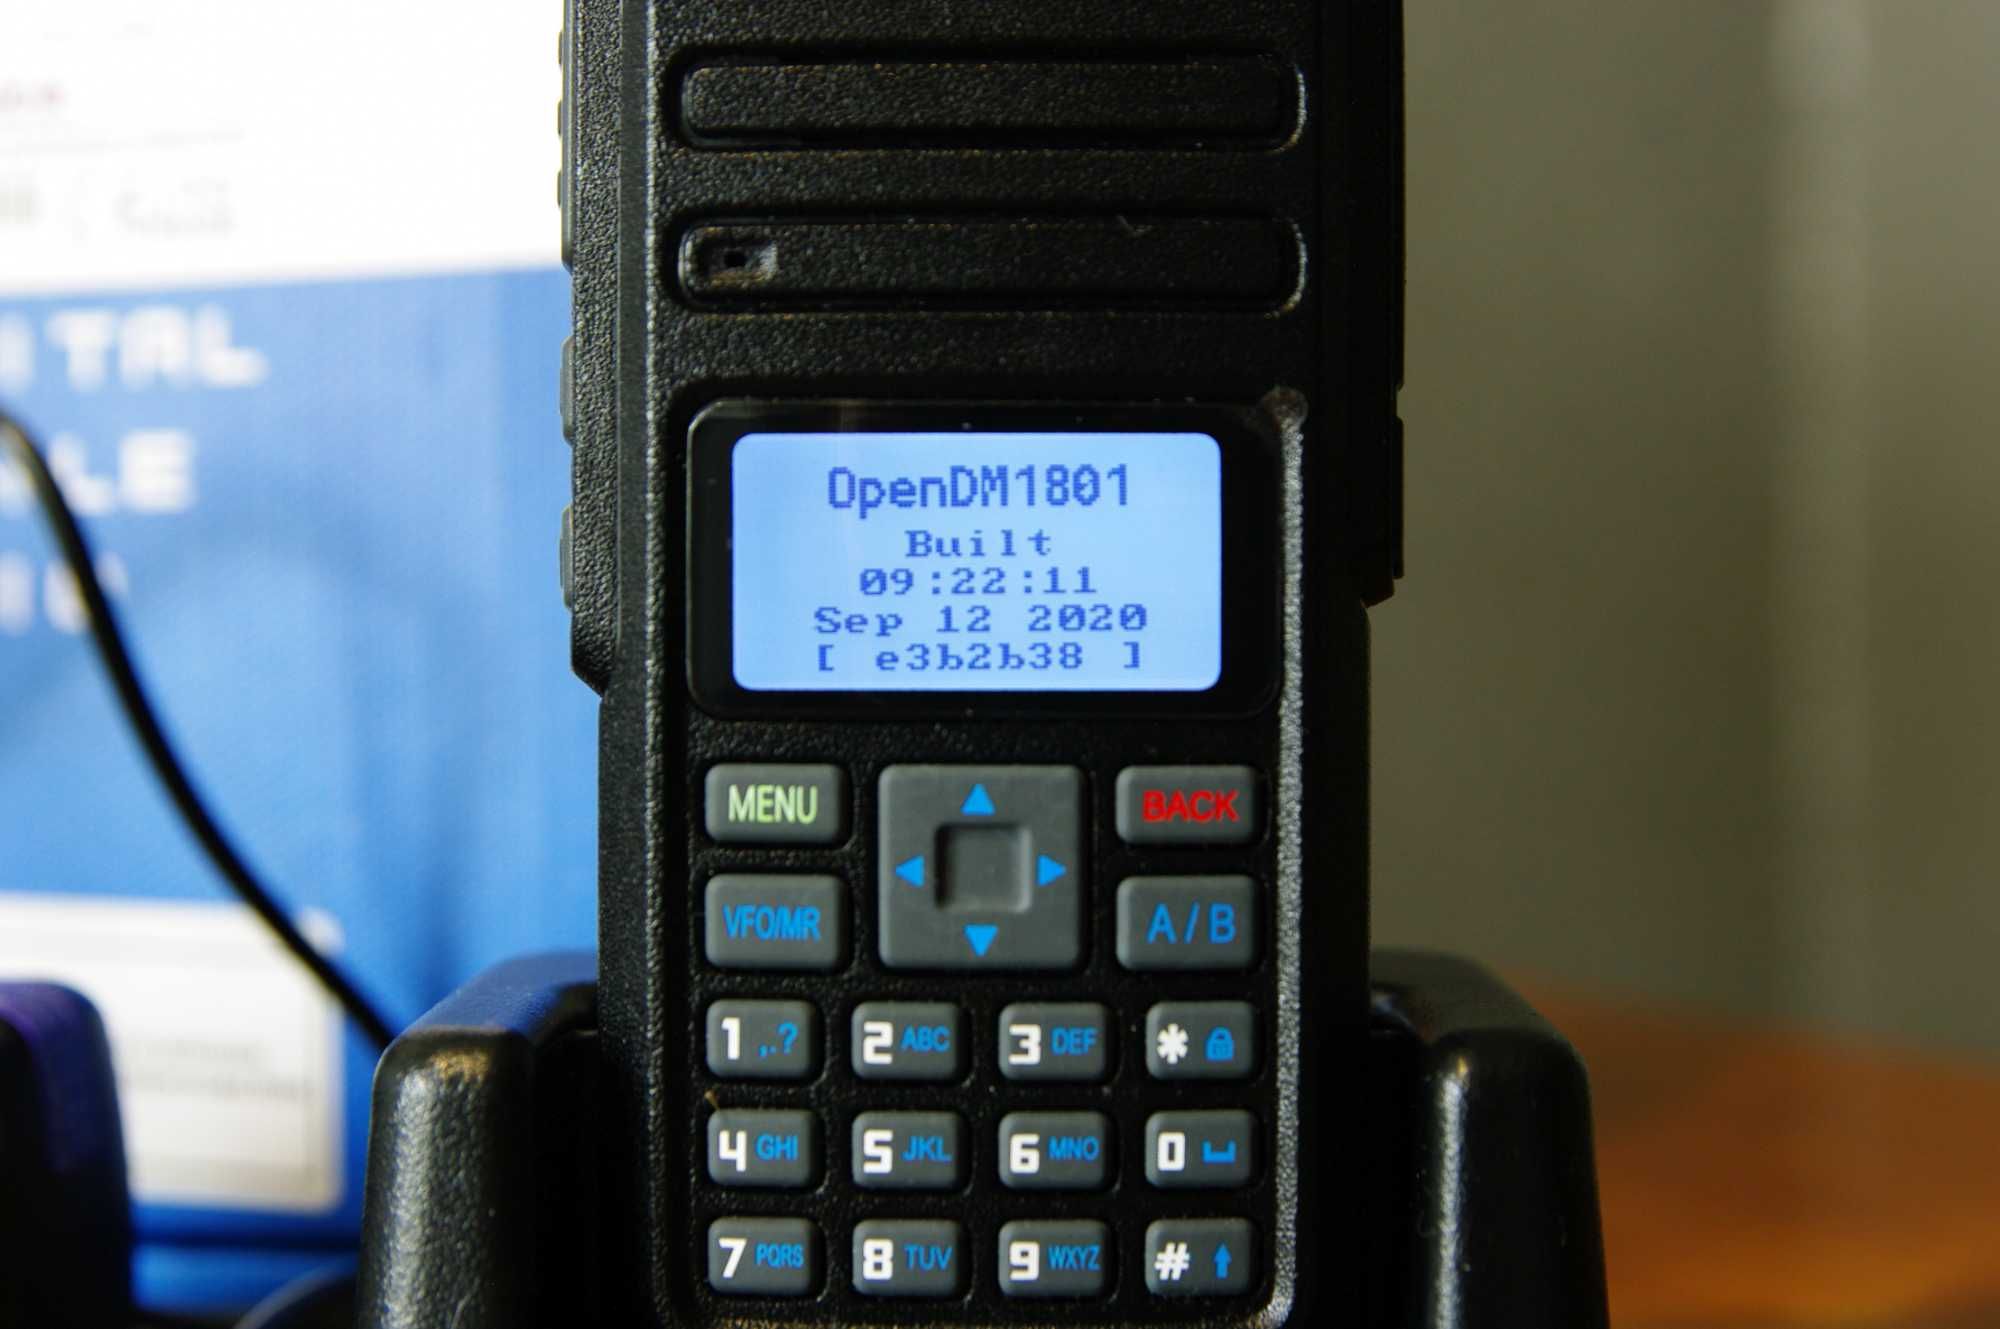 Radiotelefon Baofeng dm-1801 opengd77